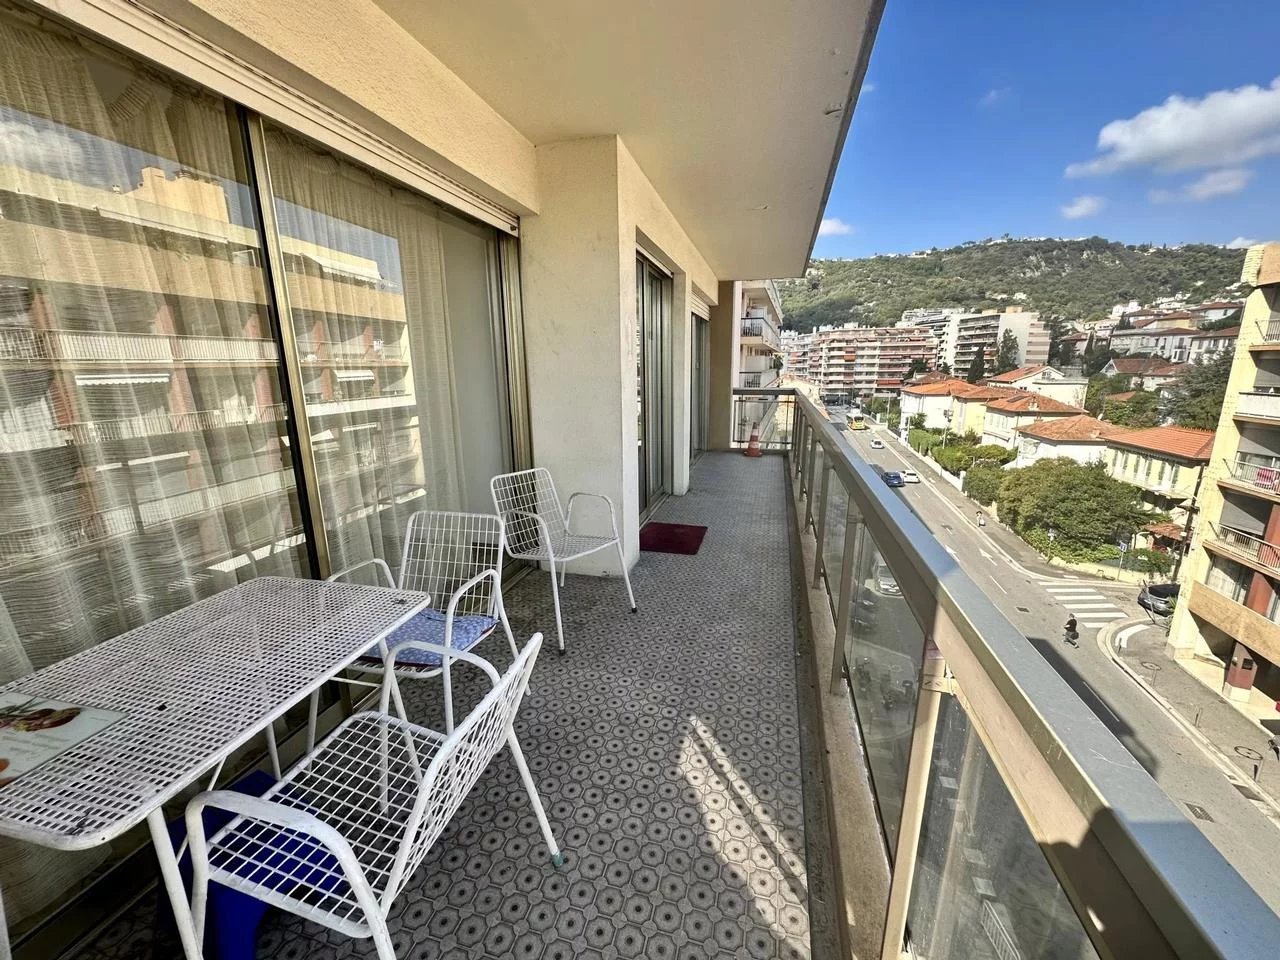 Appartement  3 Locali 62.96m2  In vendita   239 000 €